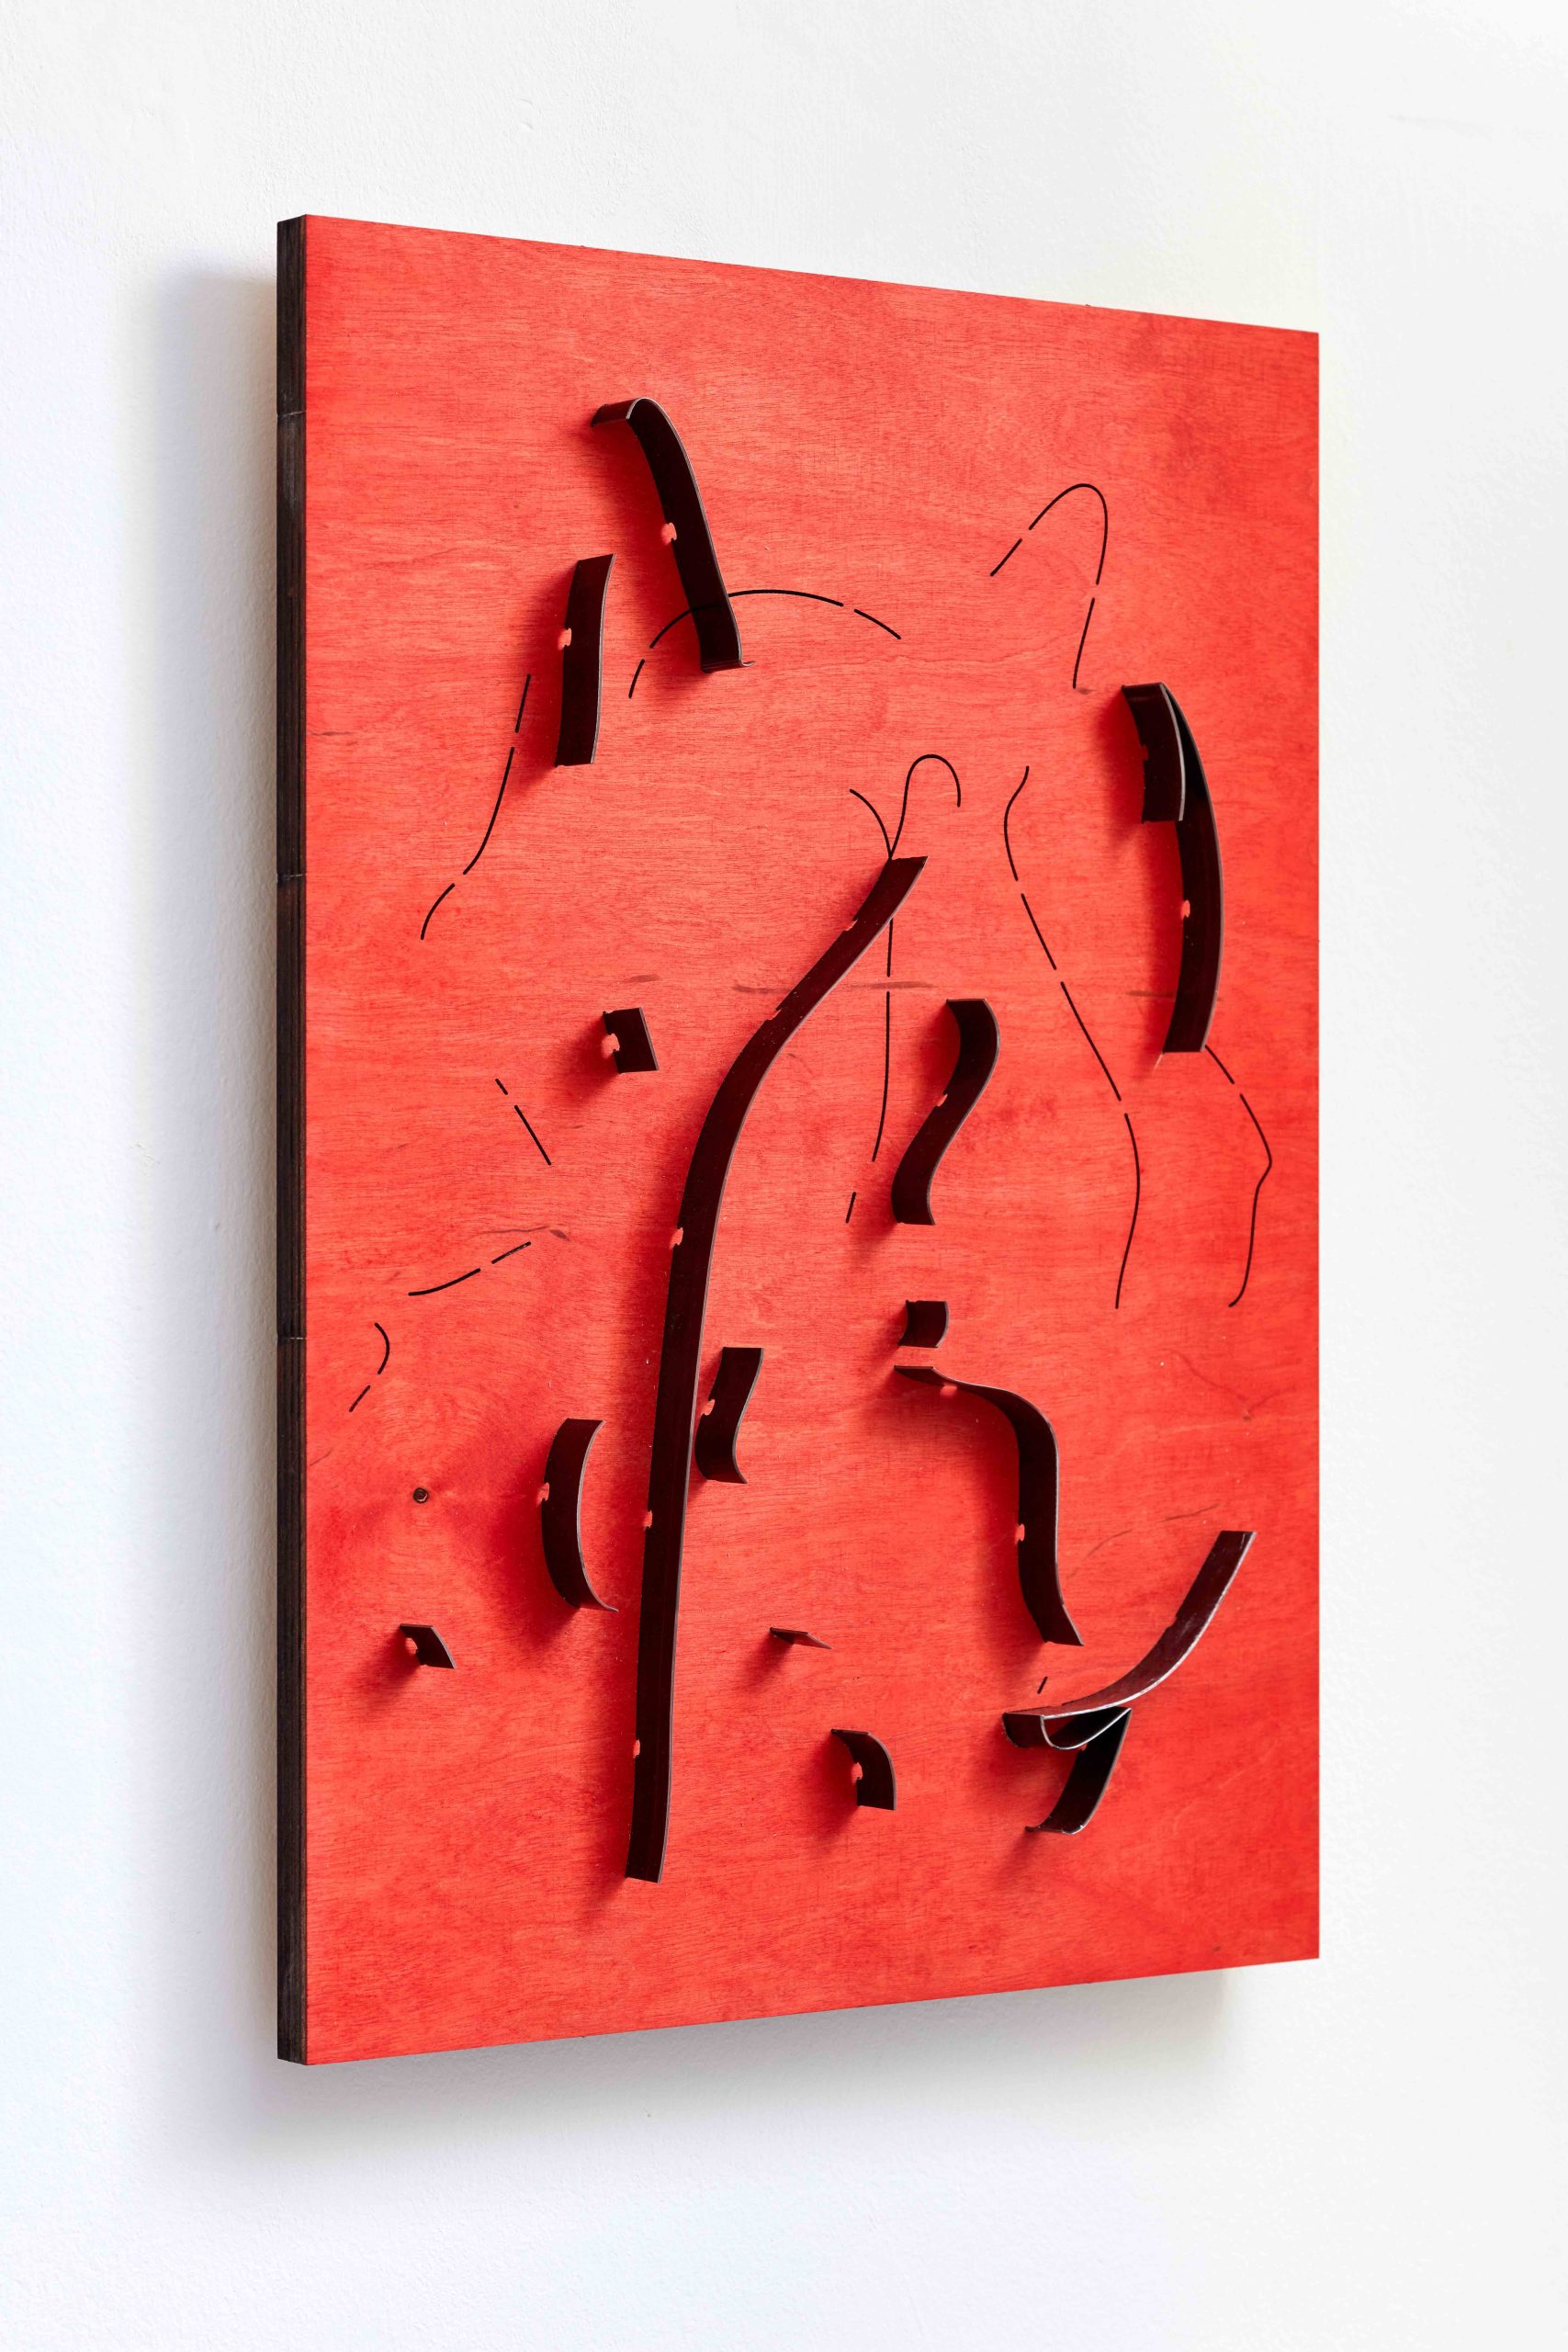 Gábor KRISTÓF: Residue of a Master Narrative, 2019
die-cutting tool, powder coated blades, plywood, 40 x 29 cm